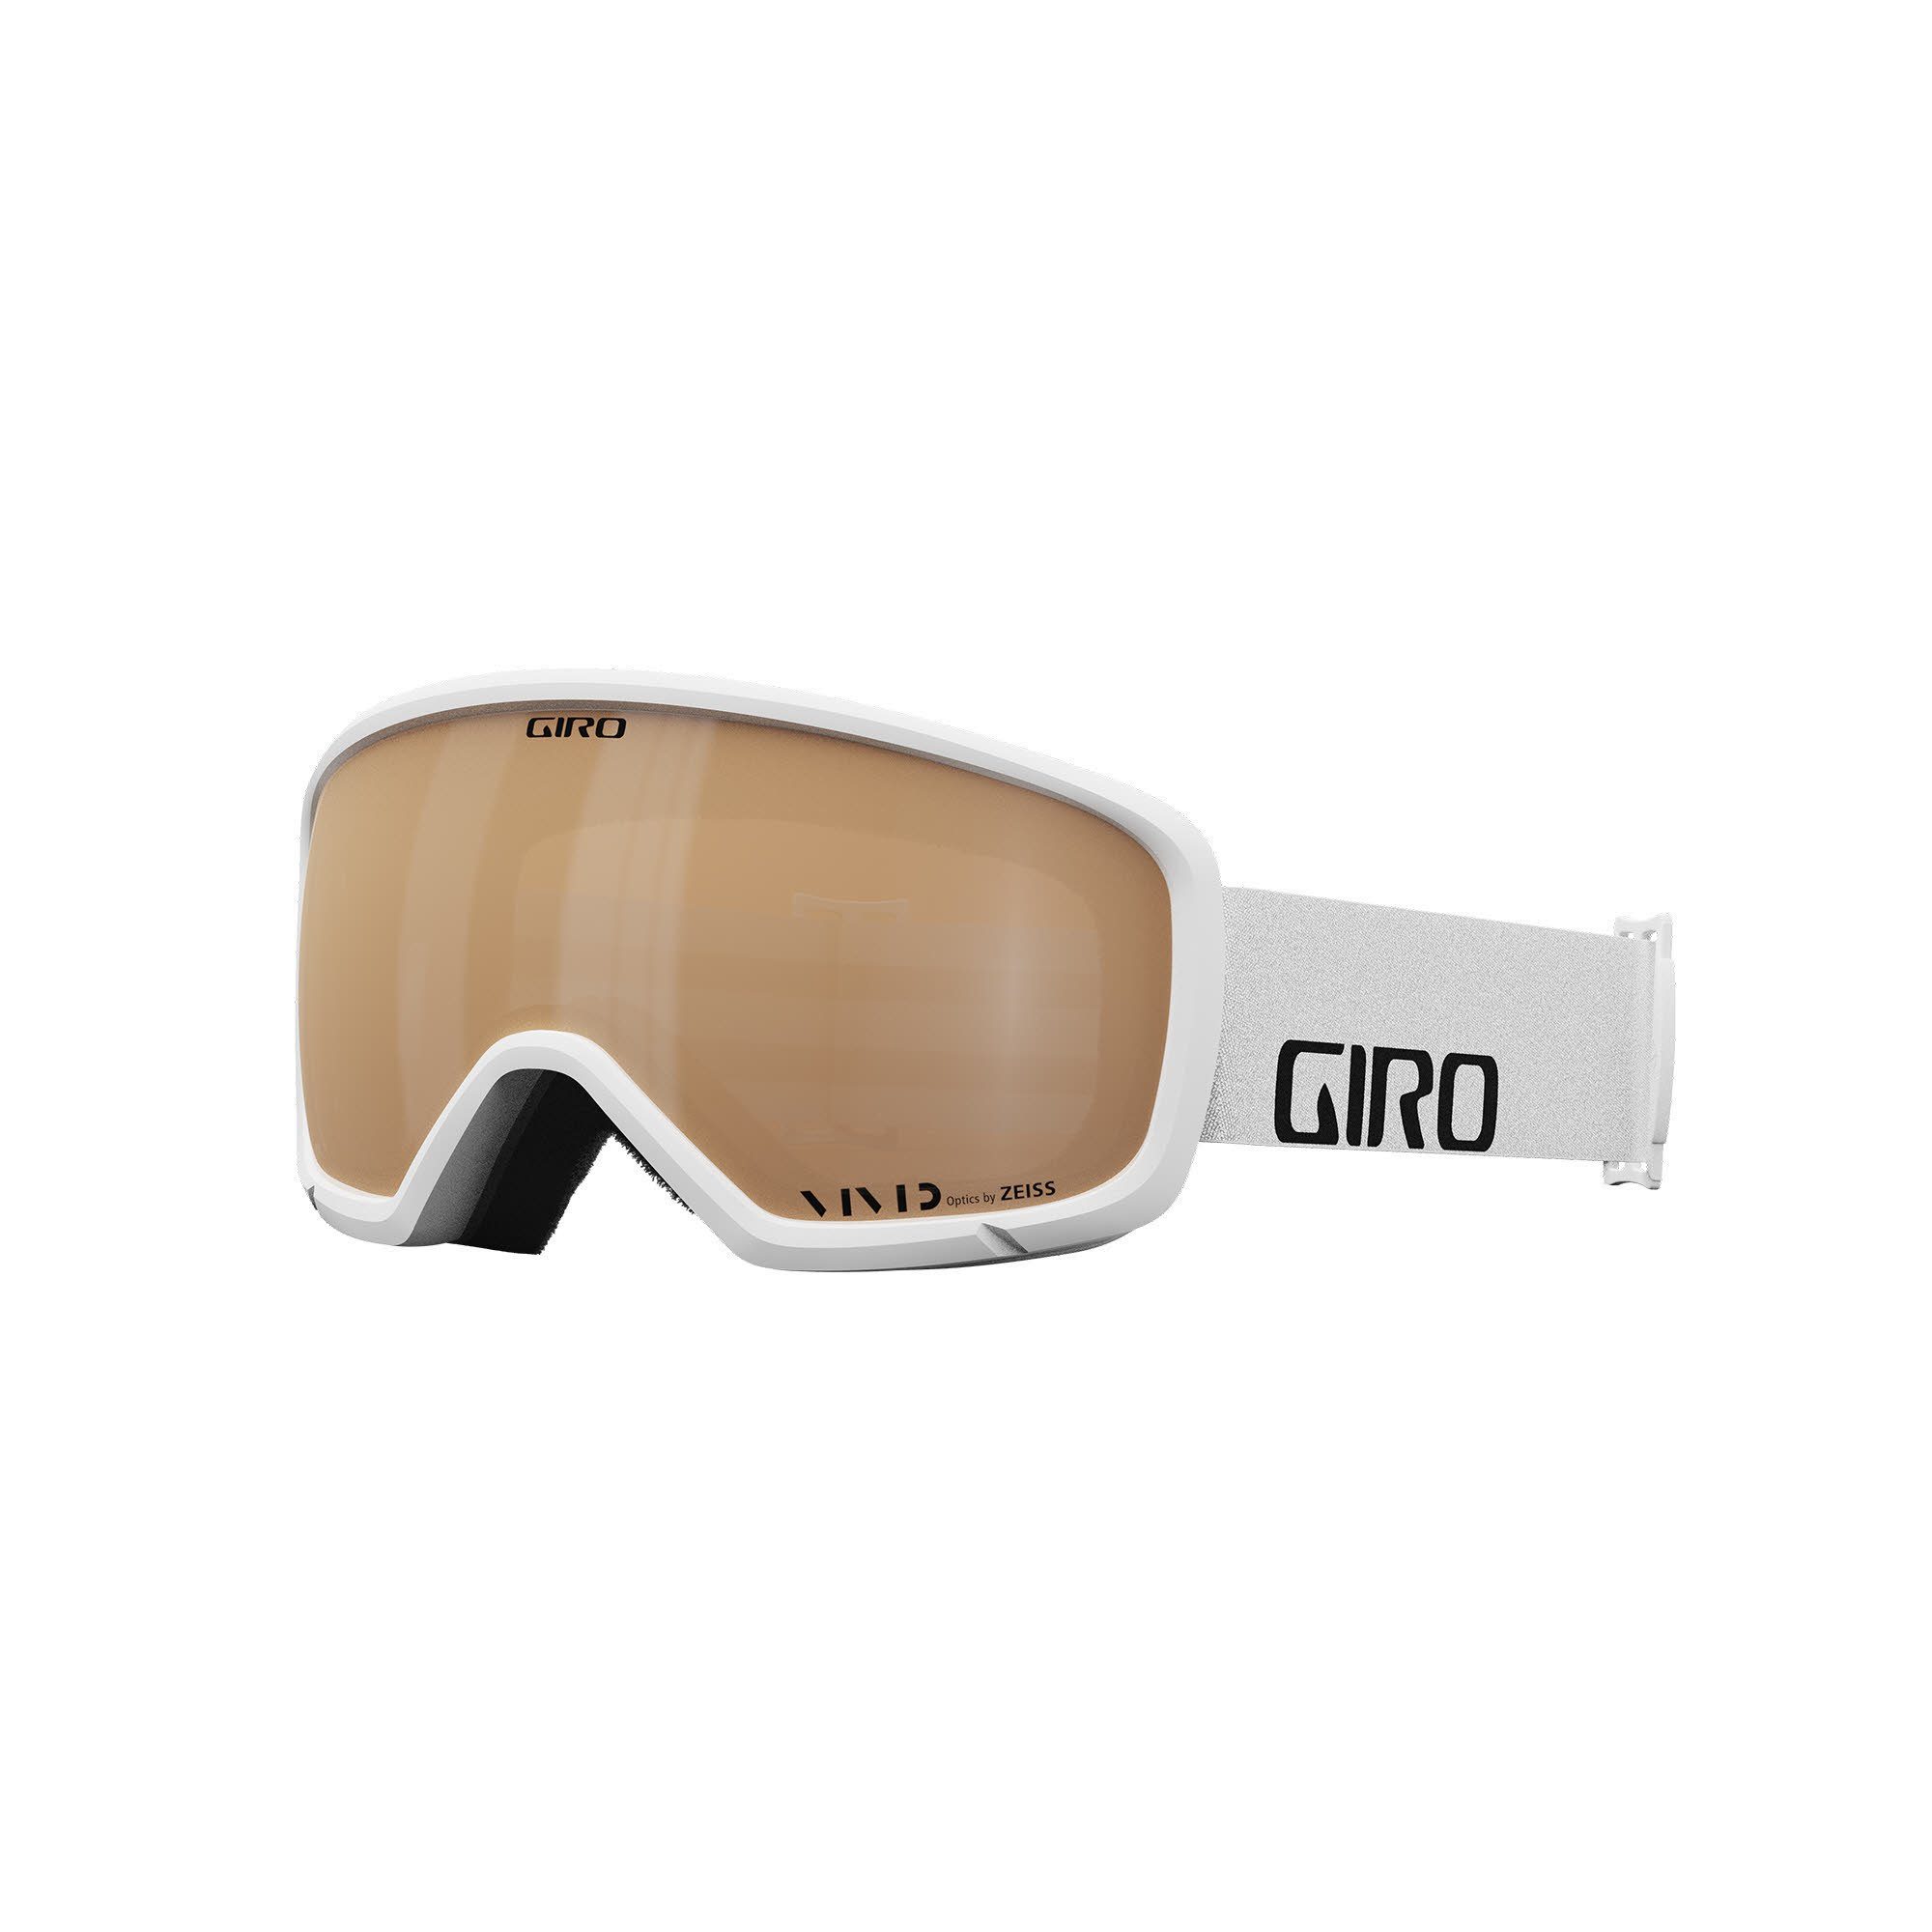 Giro weiss (10) Skibrille